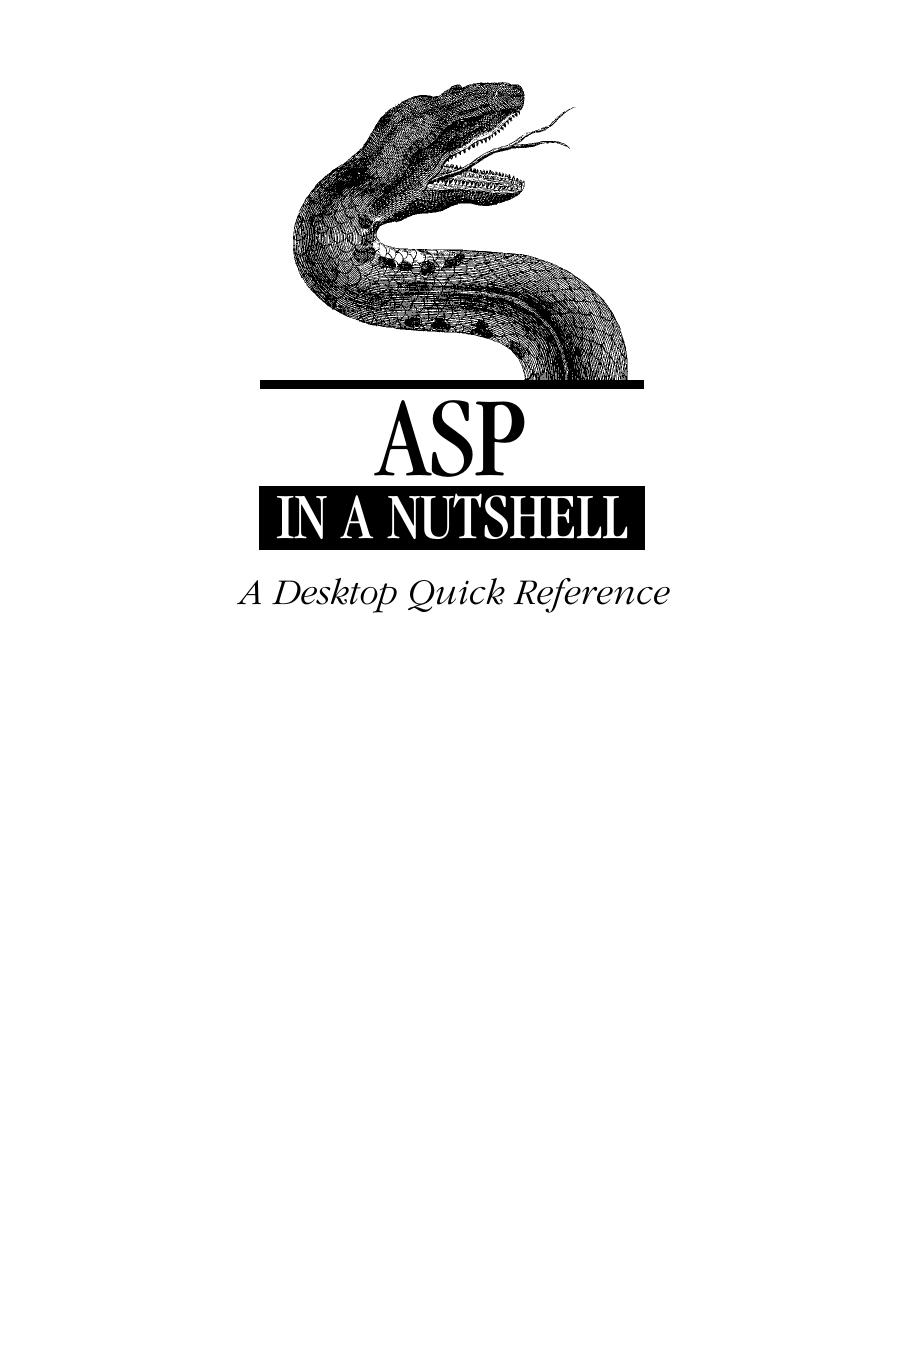 ASP in Nutshell by O'Reilly